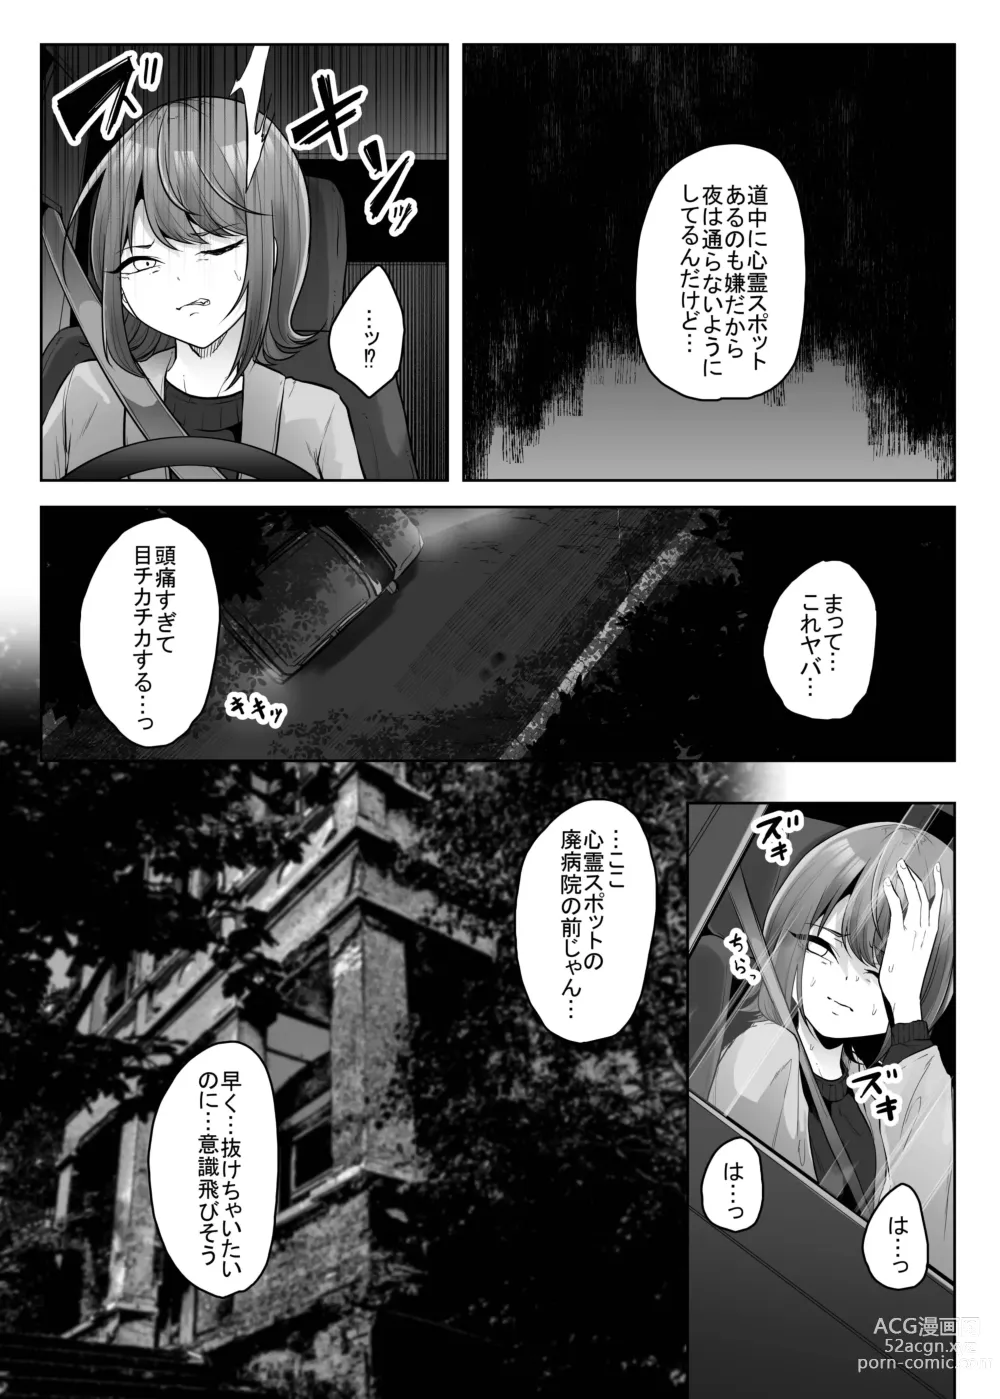 Page 5 of doujinshi Hai Byouin No Kanja